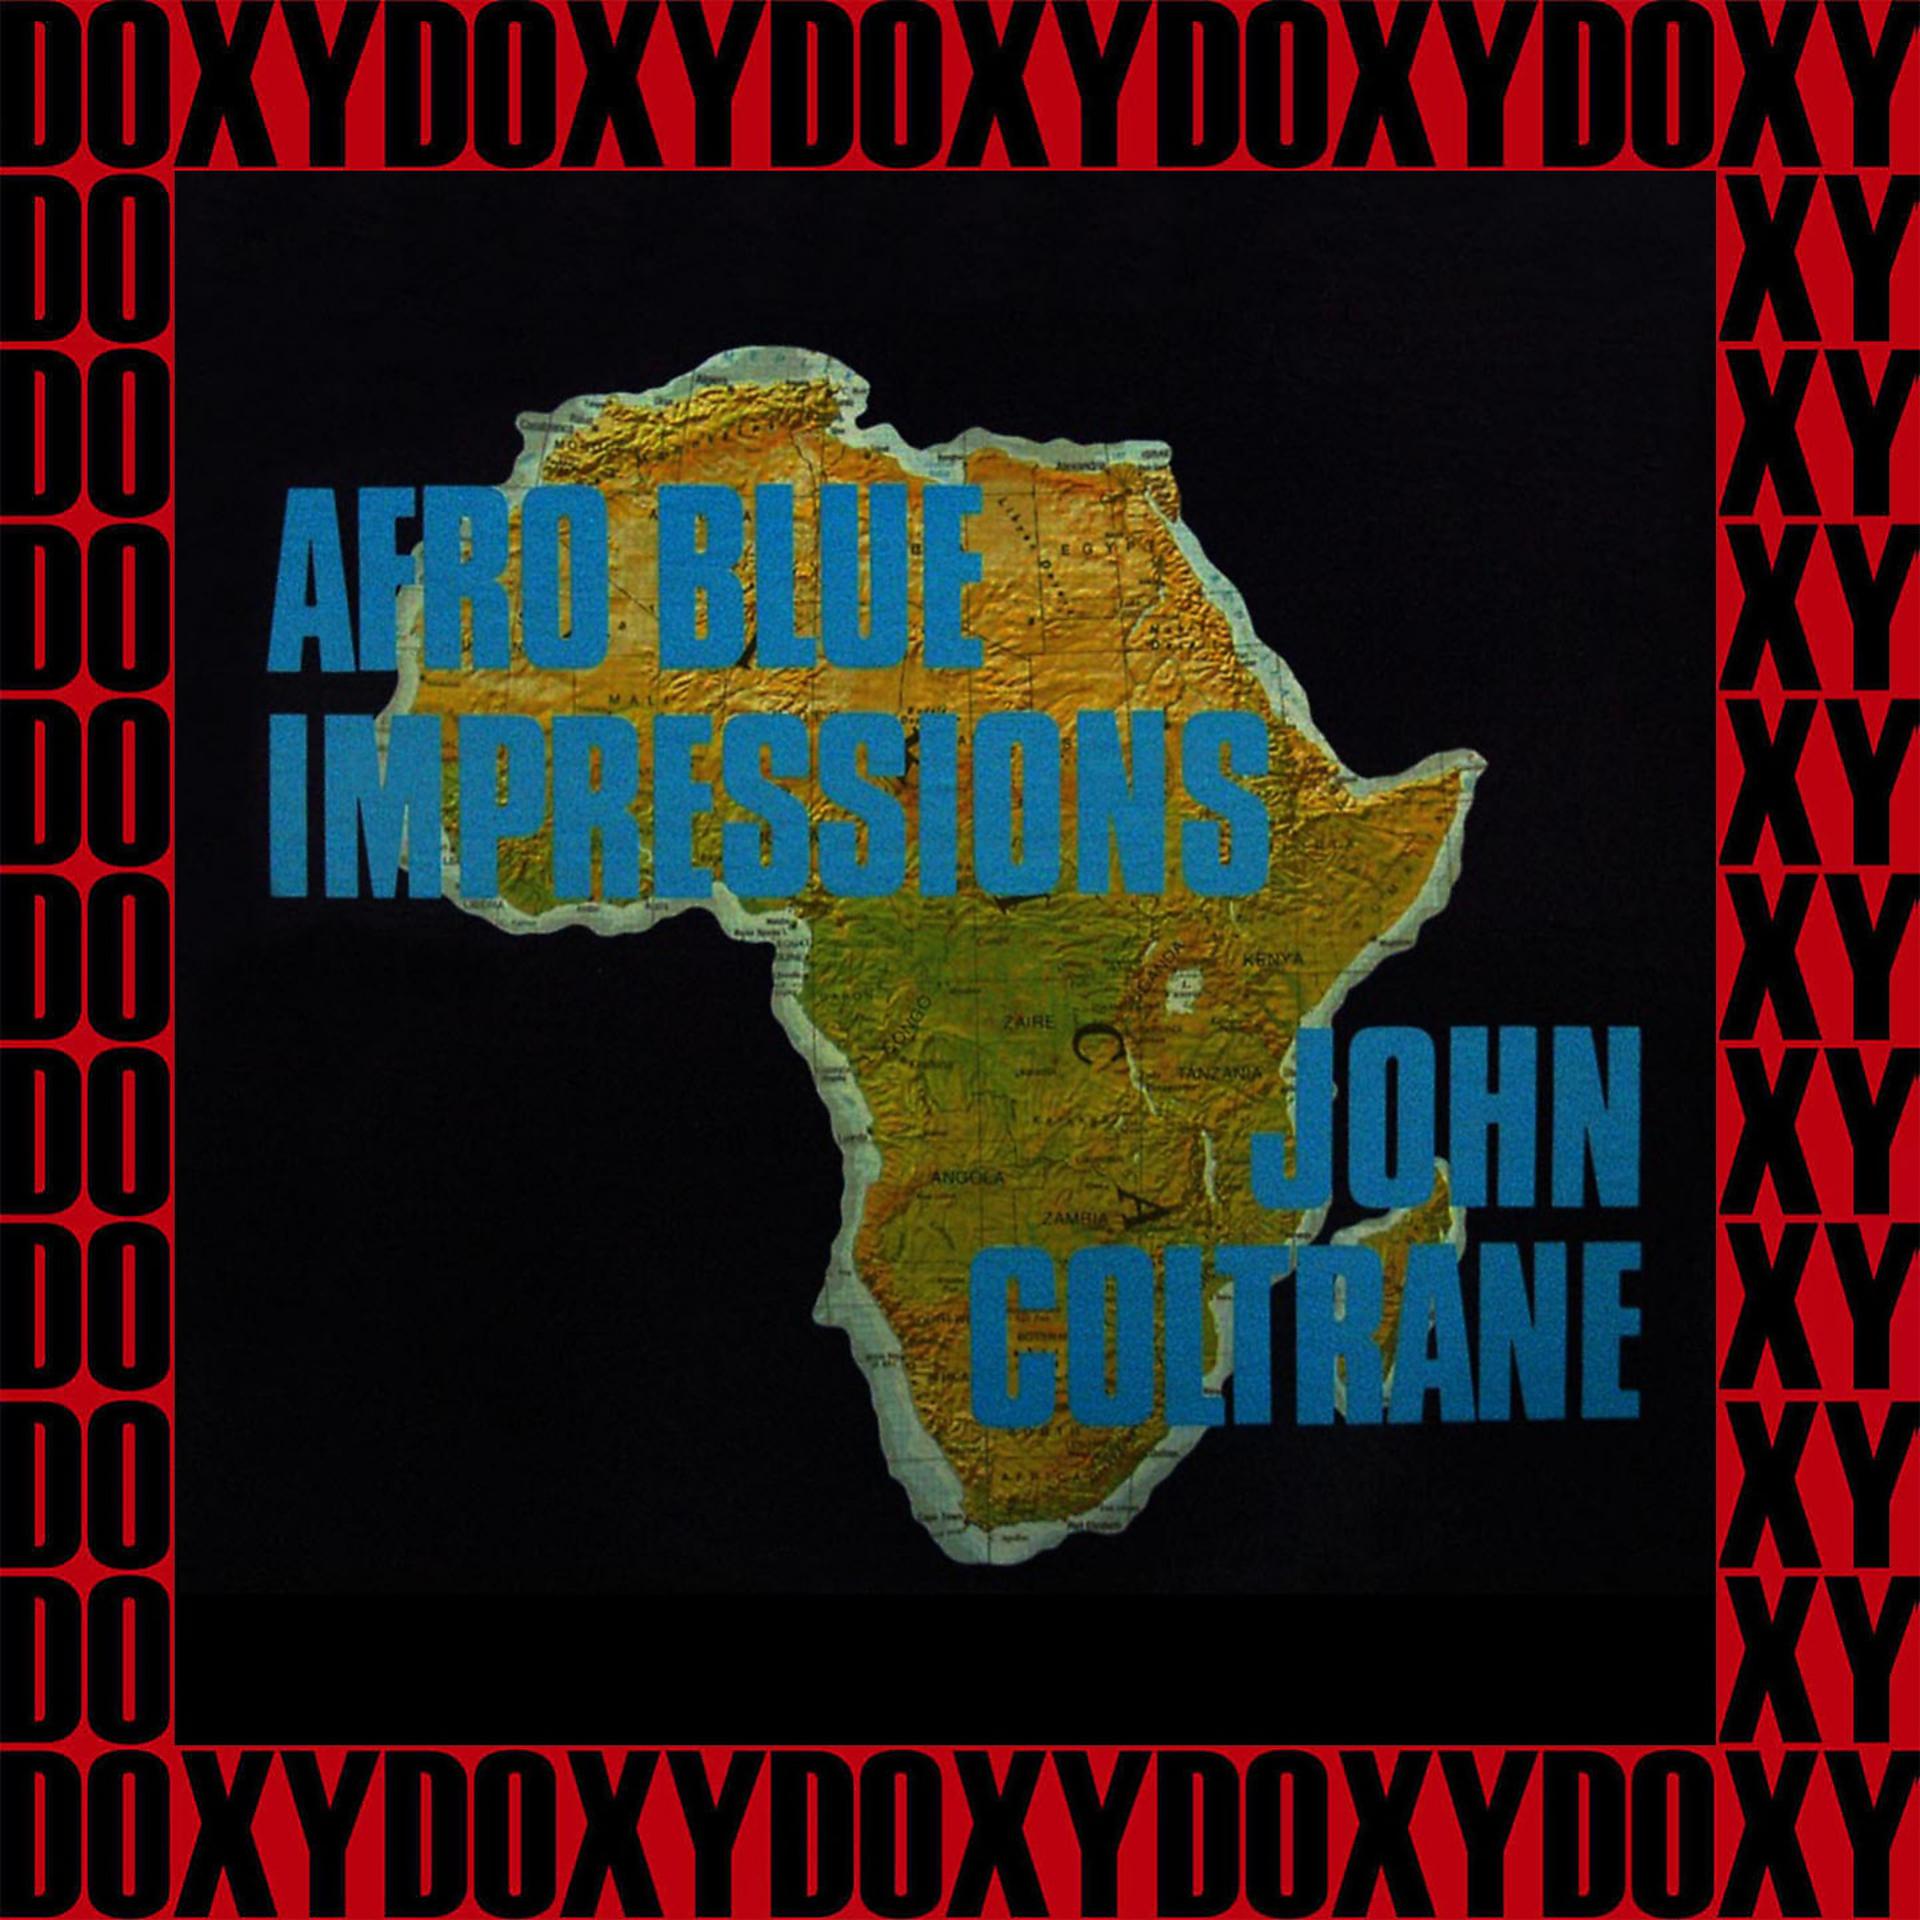 Постер альбома Afro Blue Impressions